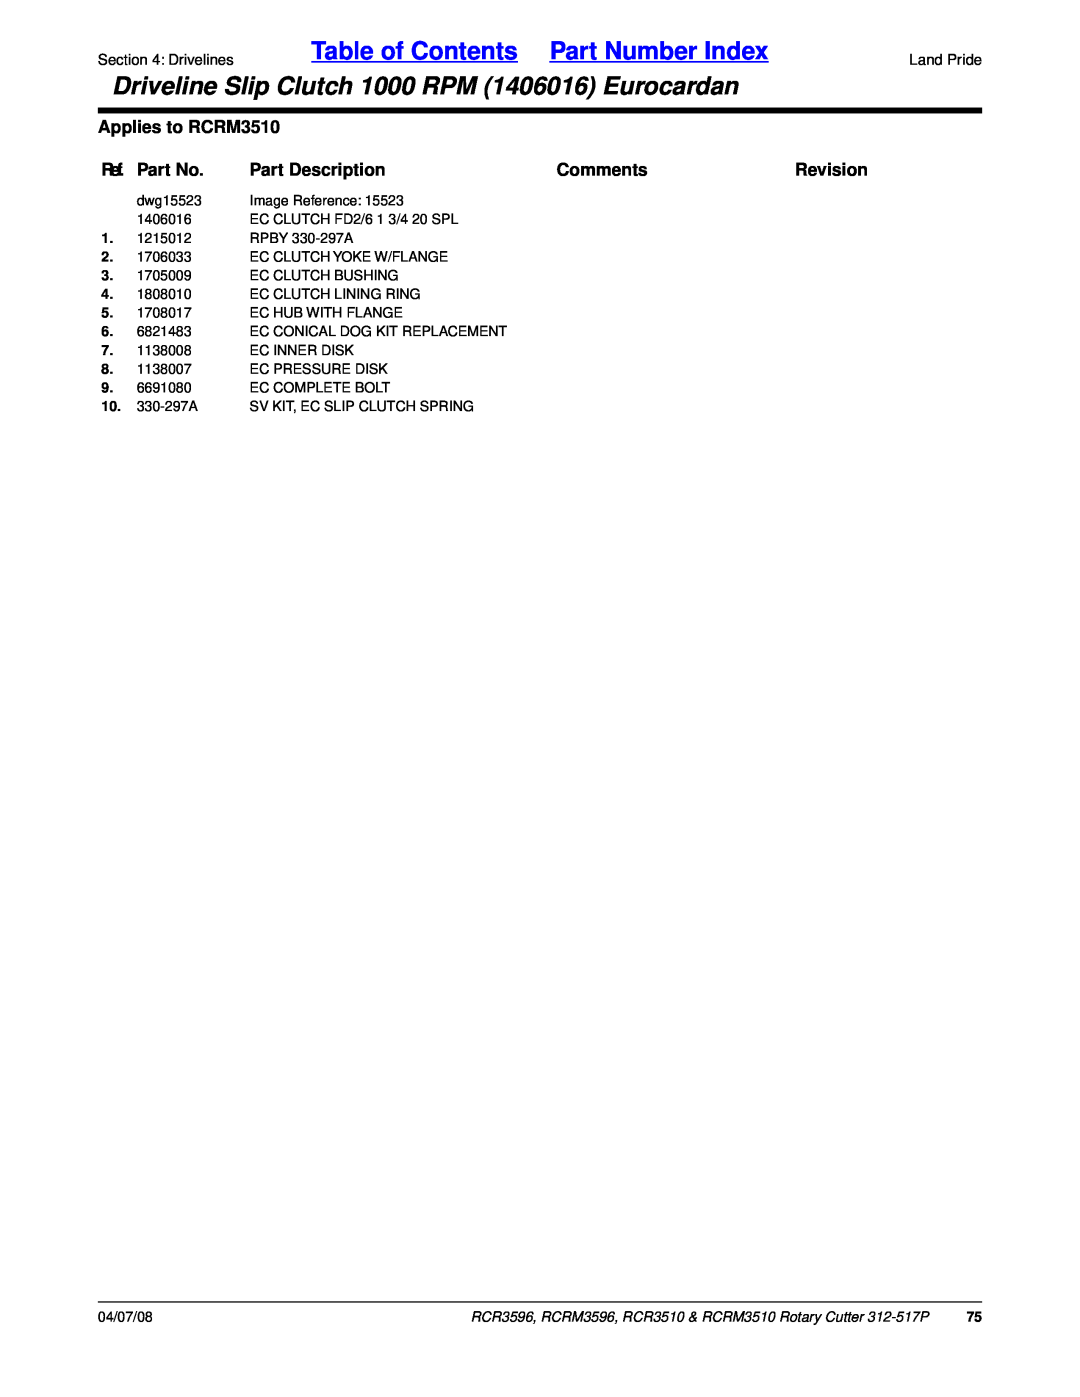 Land Pride RCR3596 Table of Contents Part Number Index, Driveline Slip Clutch 1000 RPM 1406016 Eurocardan, Ref. Part No 